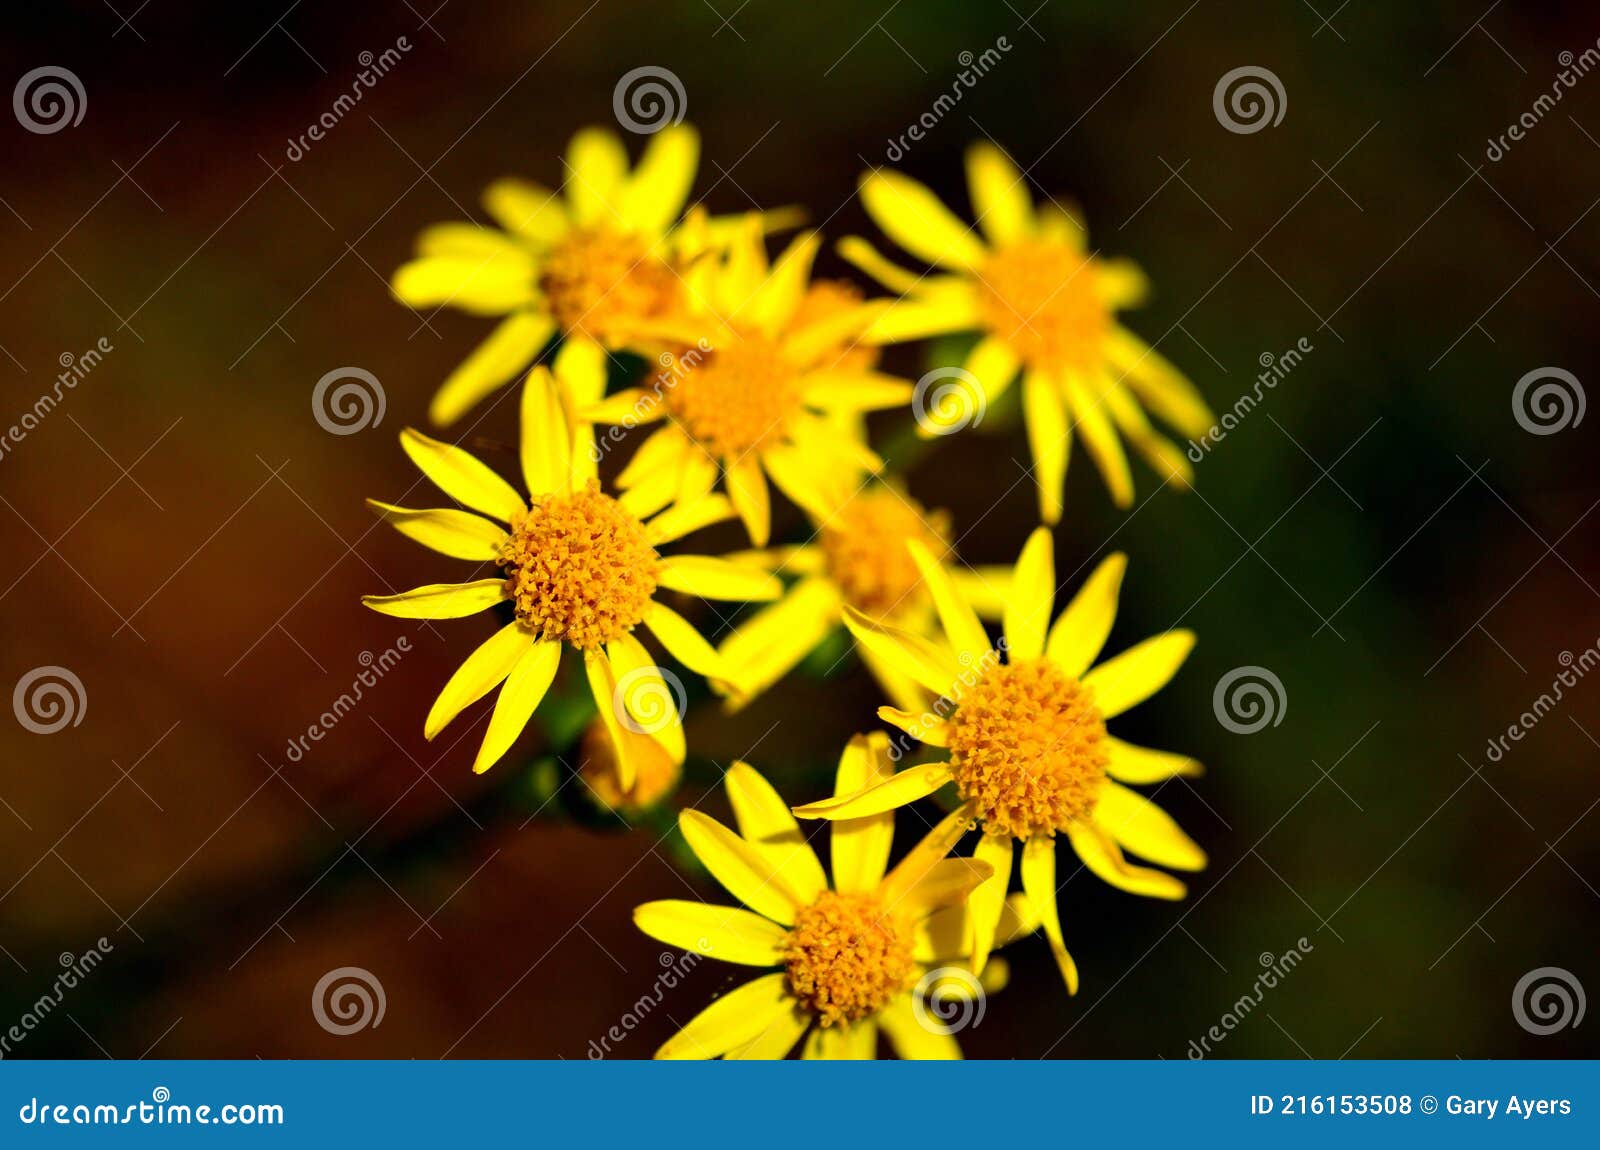 common ragwort flower - yellow flowers